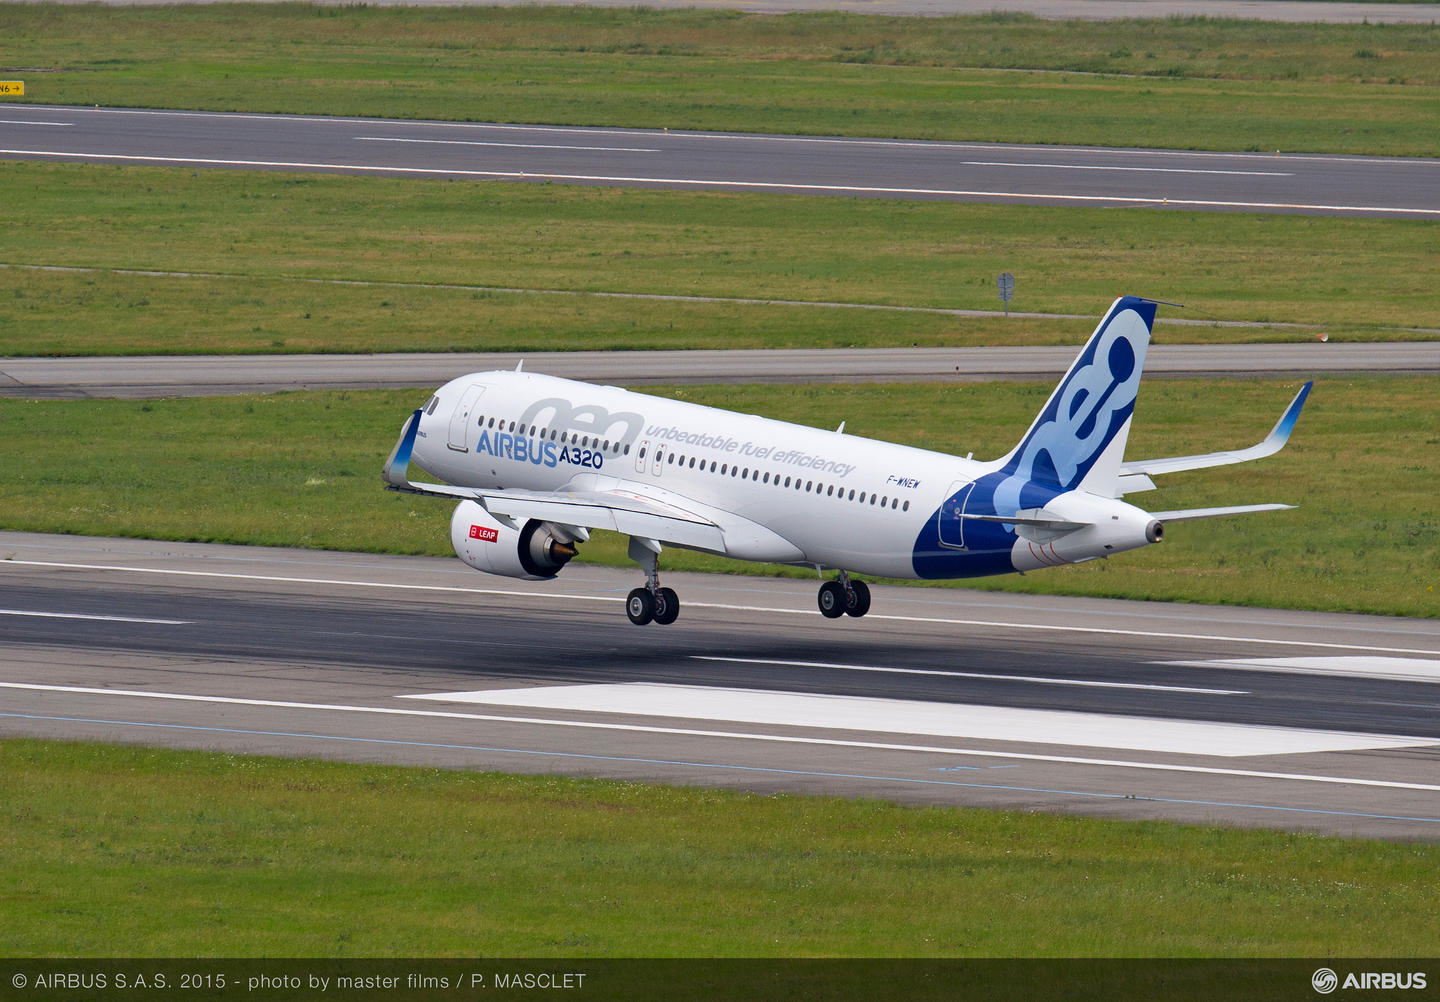 Airbus A320neo landing